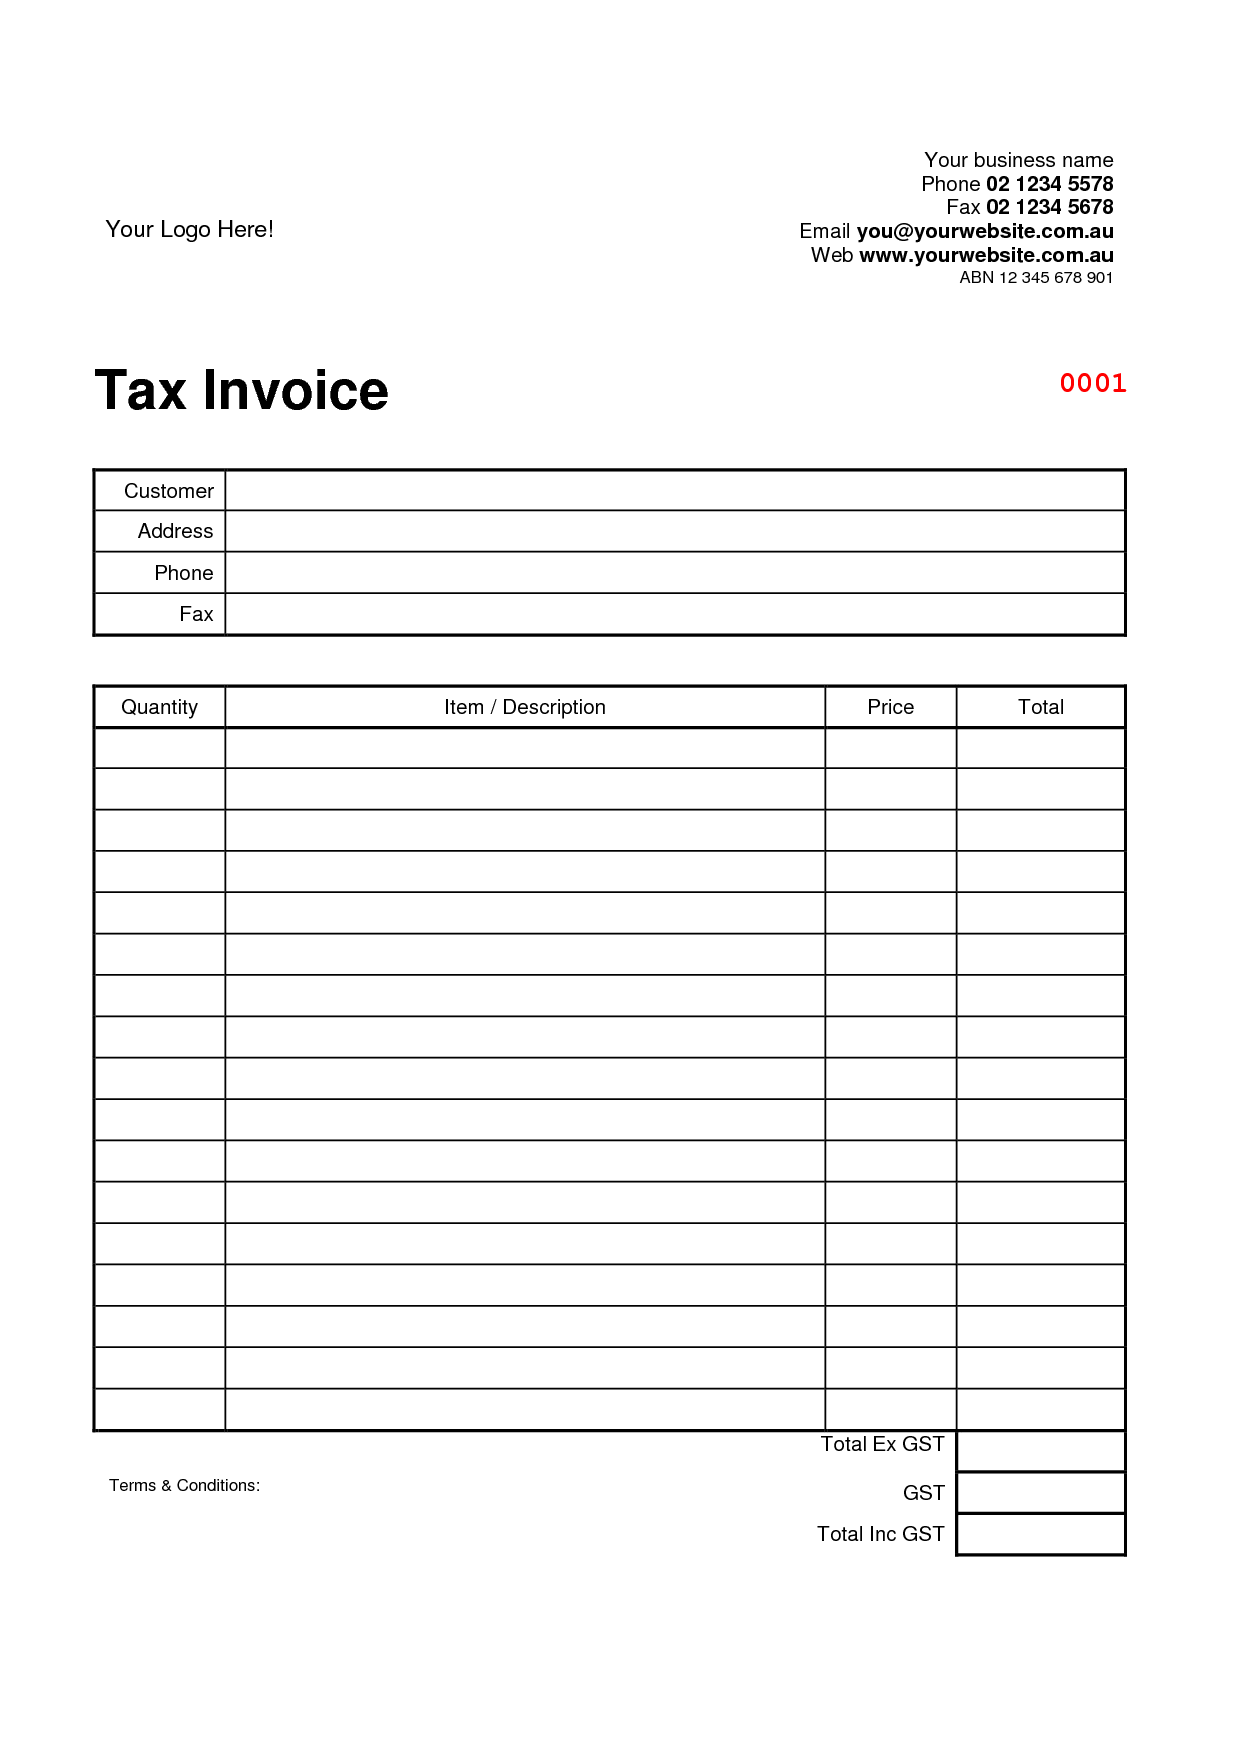 Australian Tax Invoice Template Free Design Word Australia 1272 X 